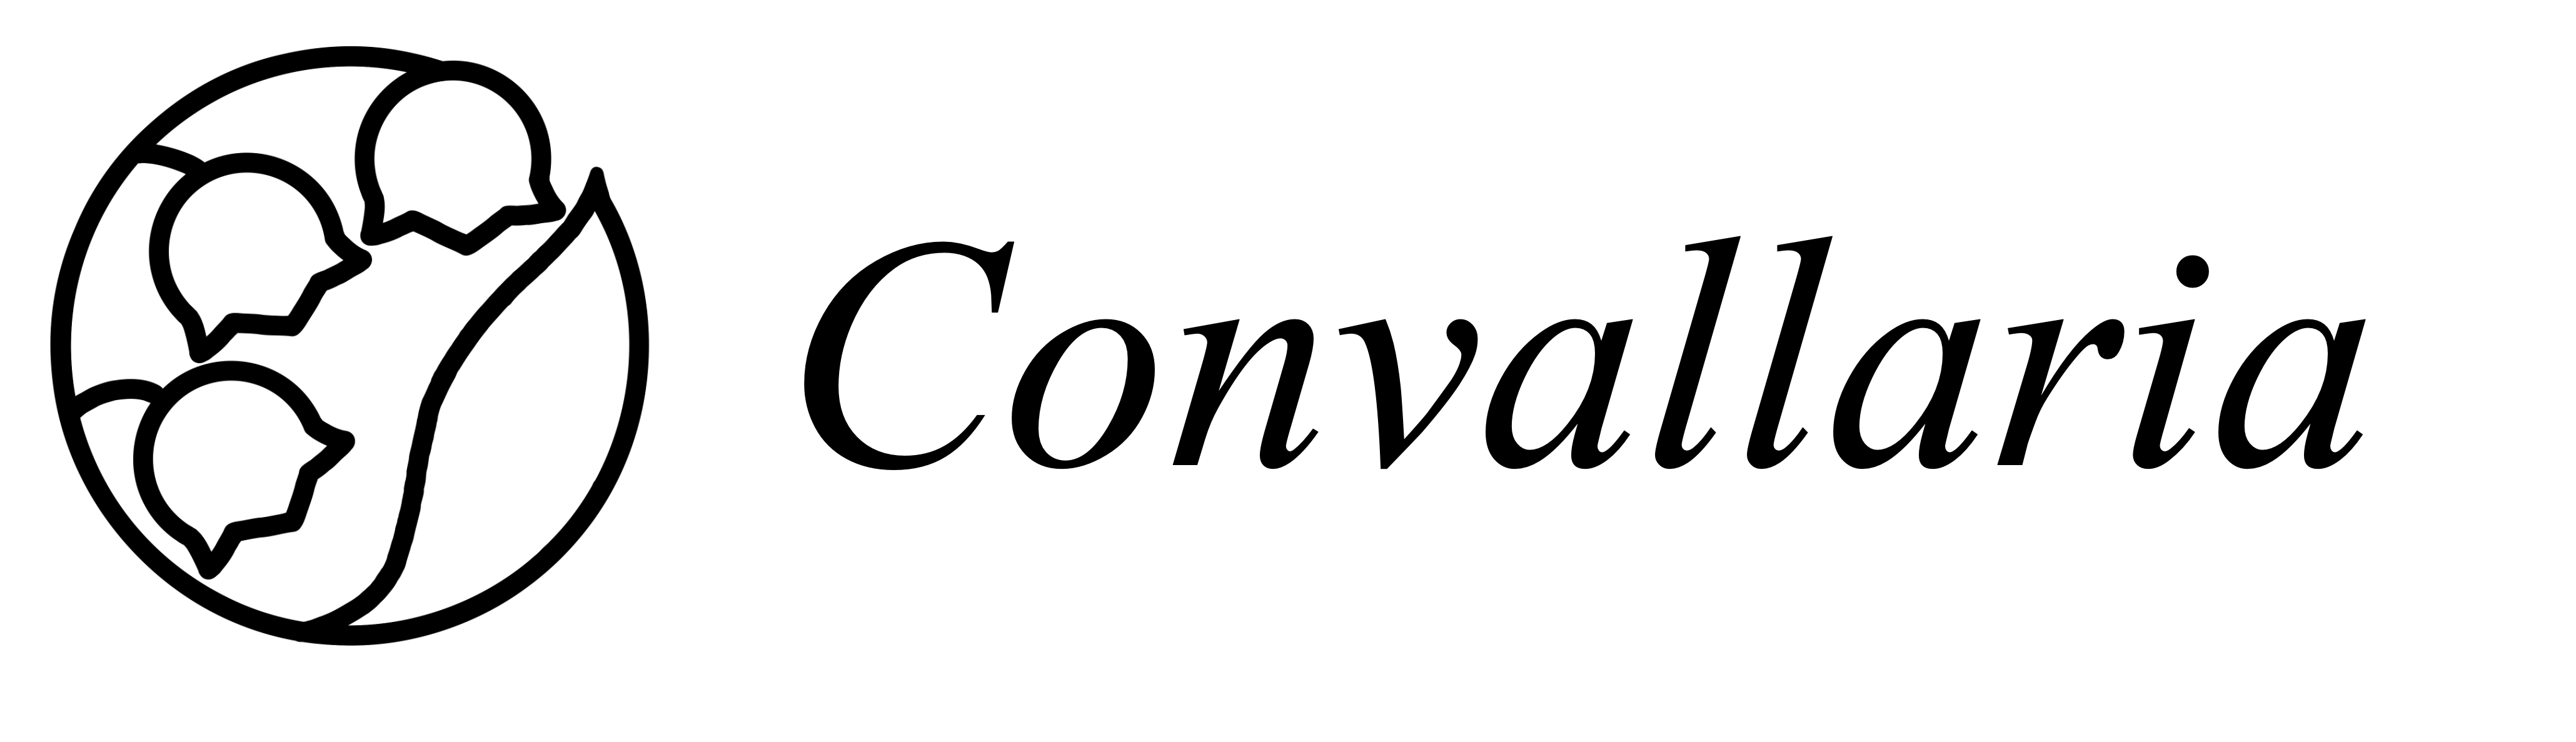 logo-convallaria-black